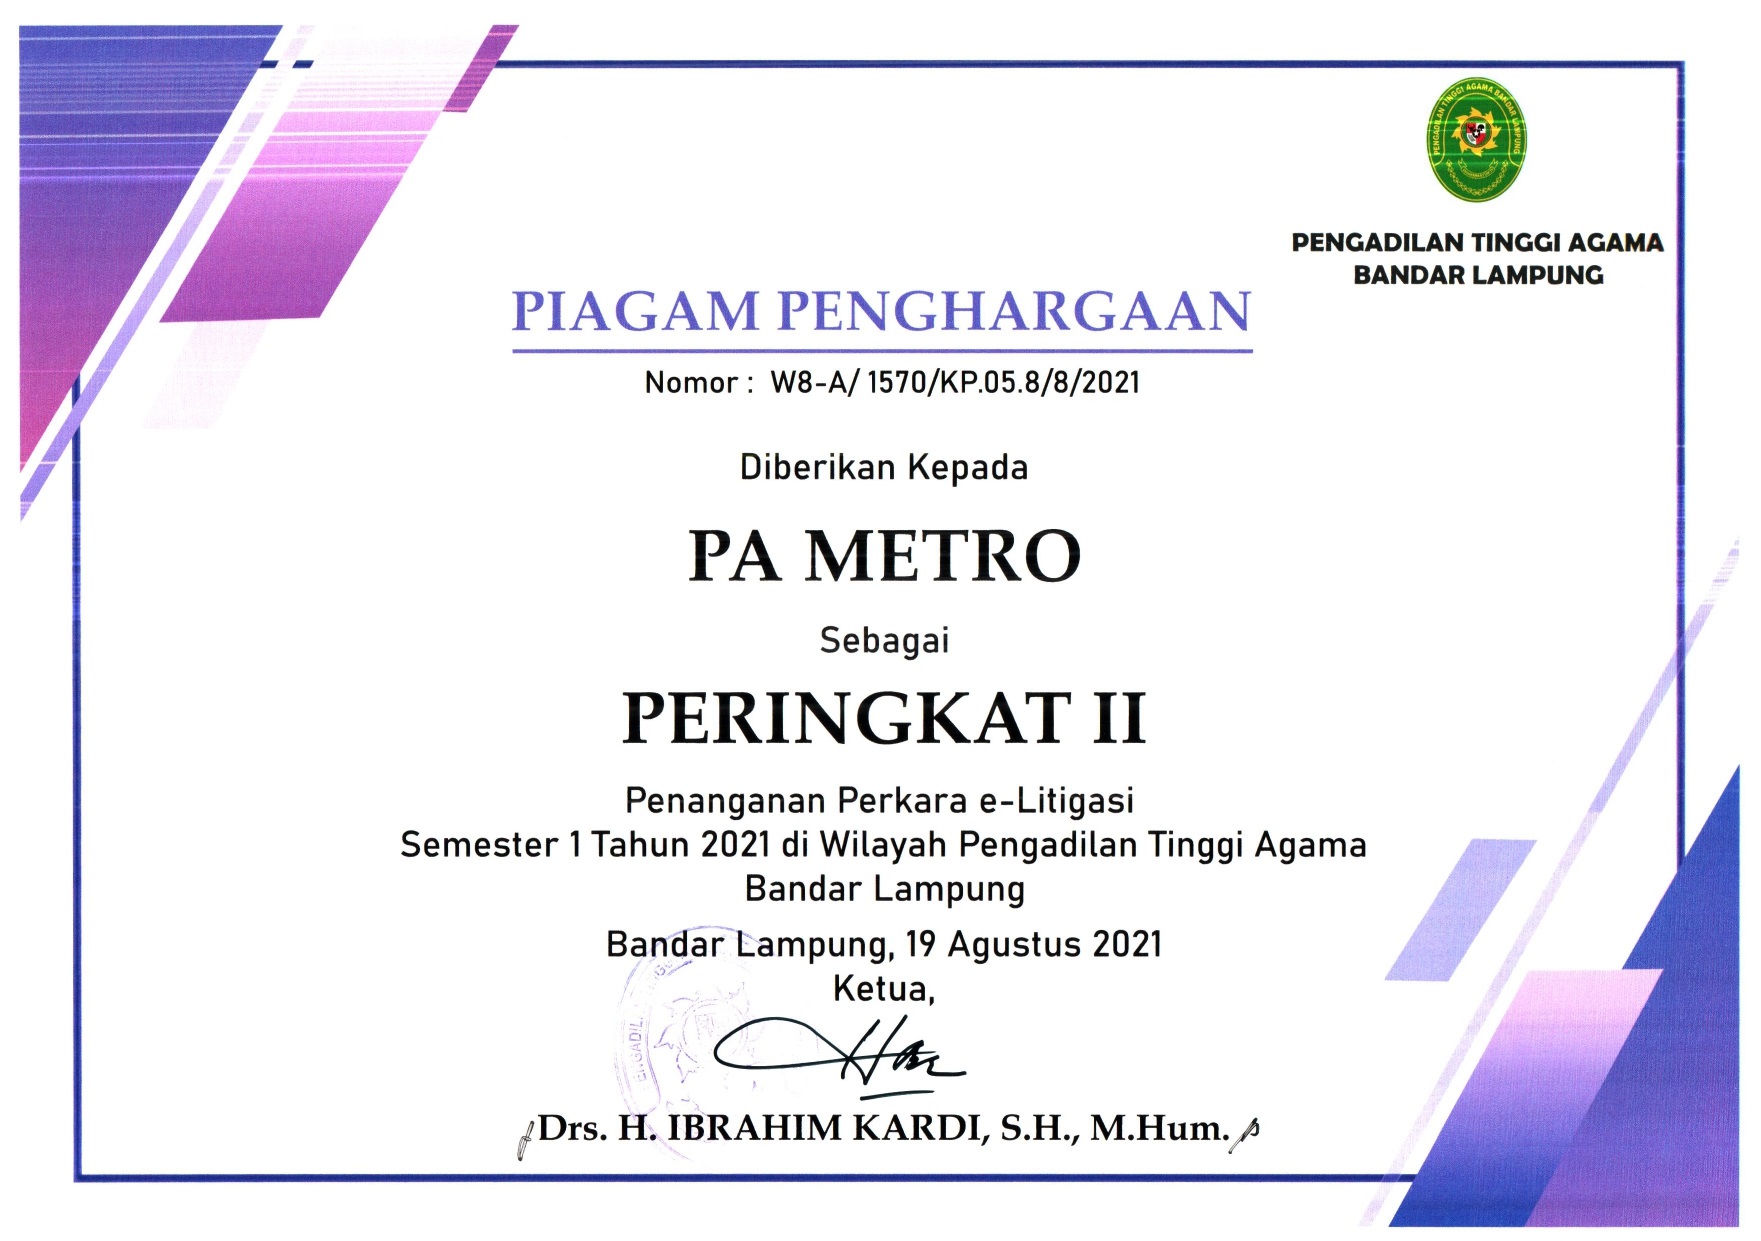 Peringkat II Penganan Perkara e-Litigasi Smt I 2021 di Wilayah PTA Bandar Lampung